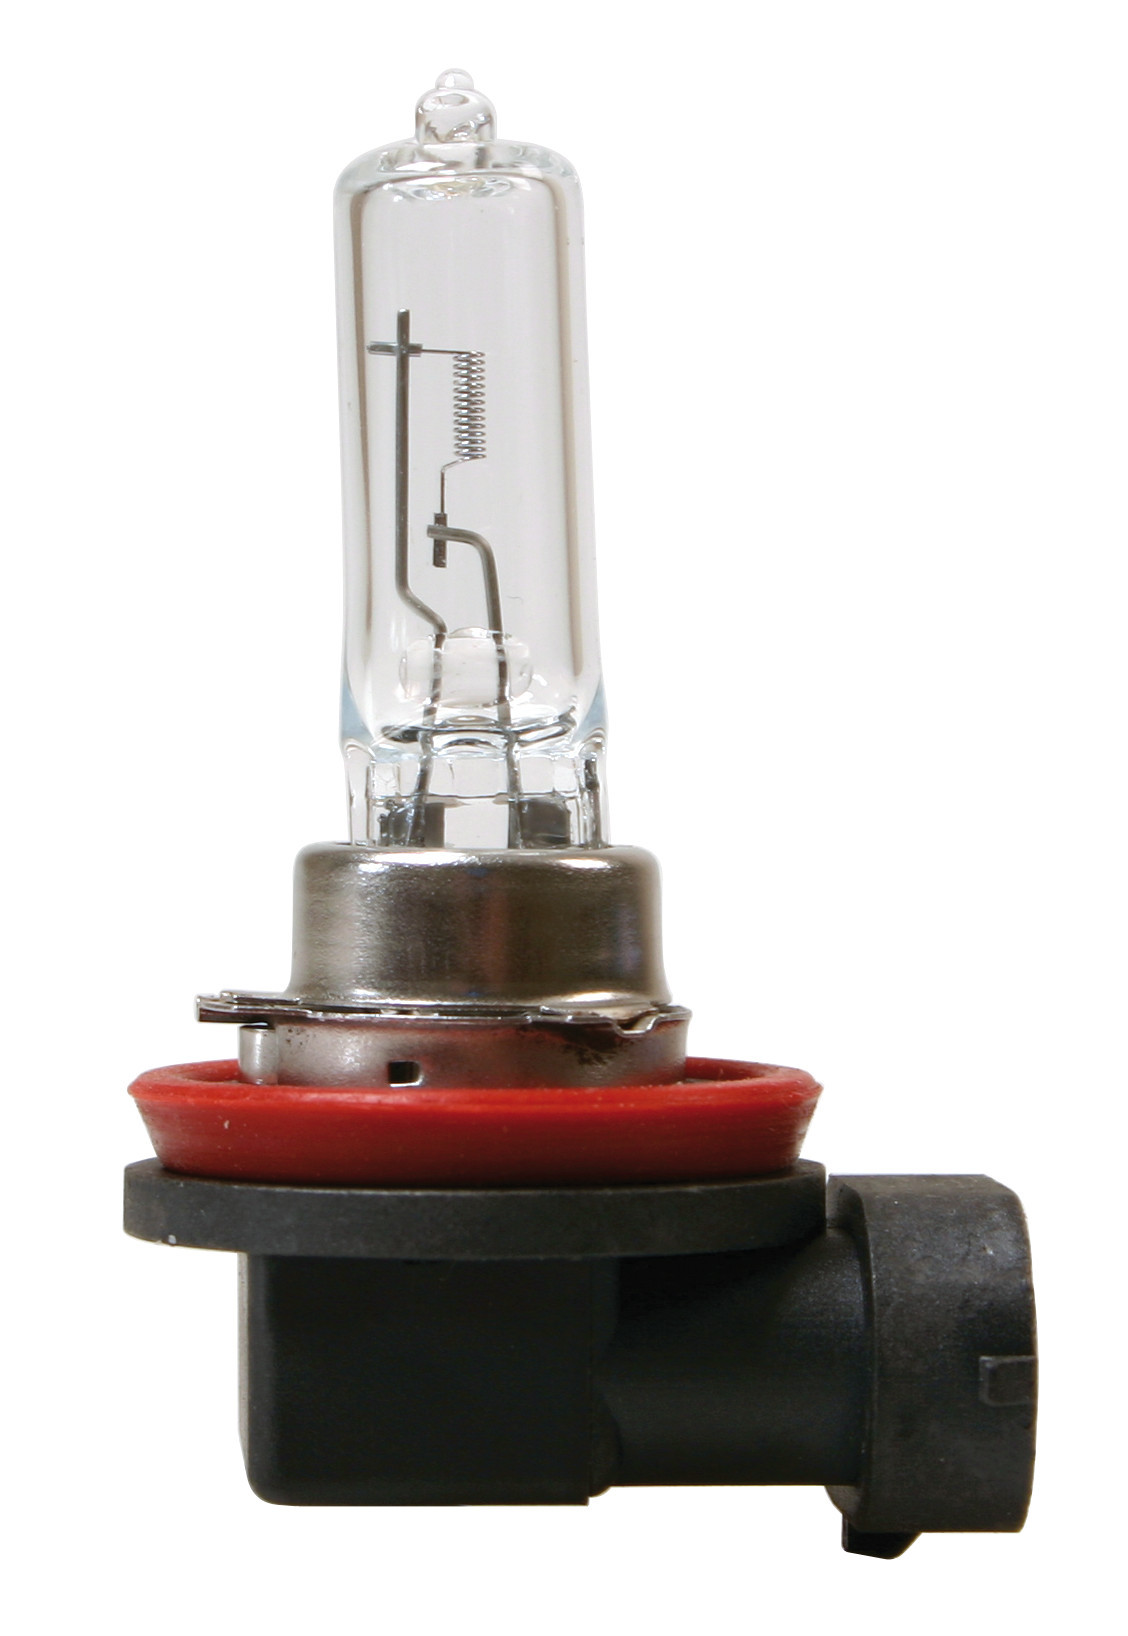 Lampa 12V classic bulb - H9 - 65W - PGJ19-5 - 1pcs thumb